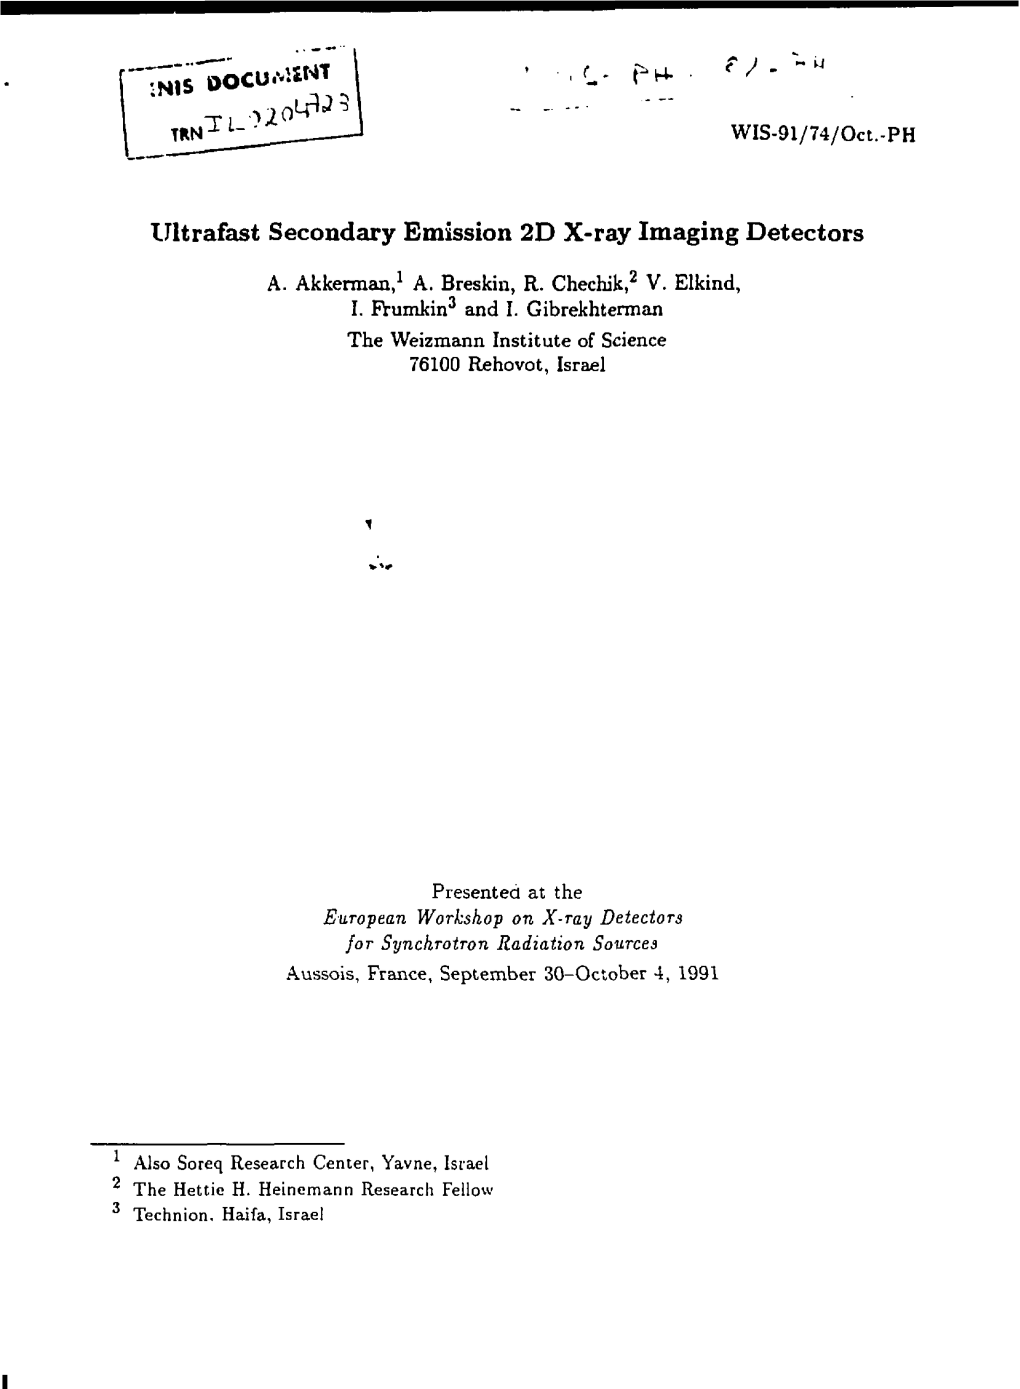 Ultrafast Secondary Emission 2D X-Ray Imaging Detectors